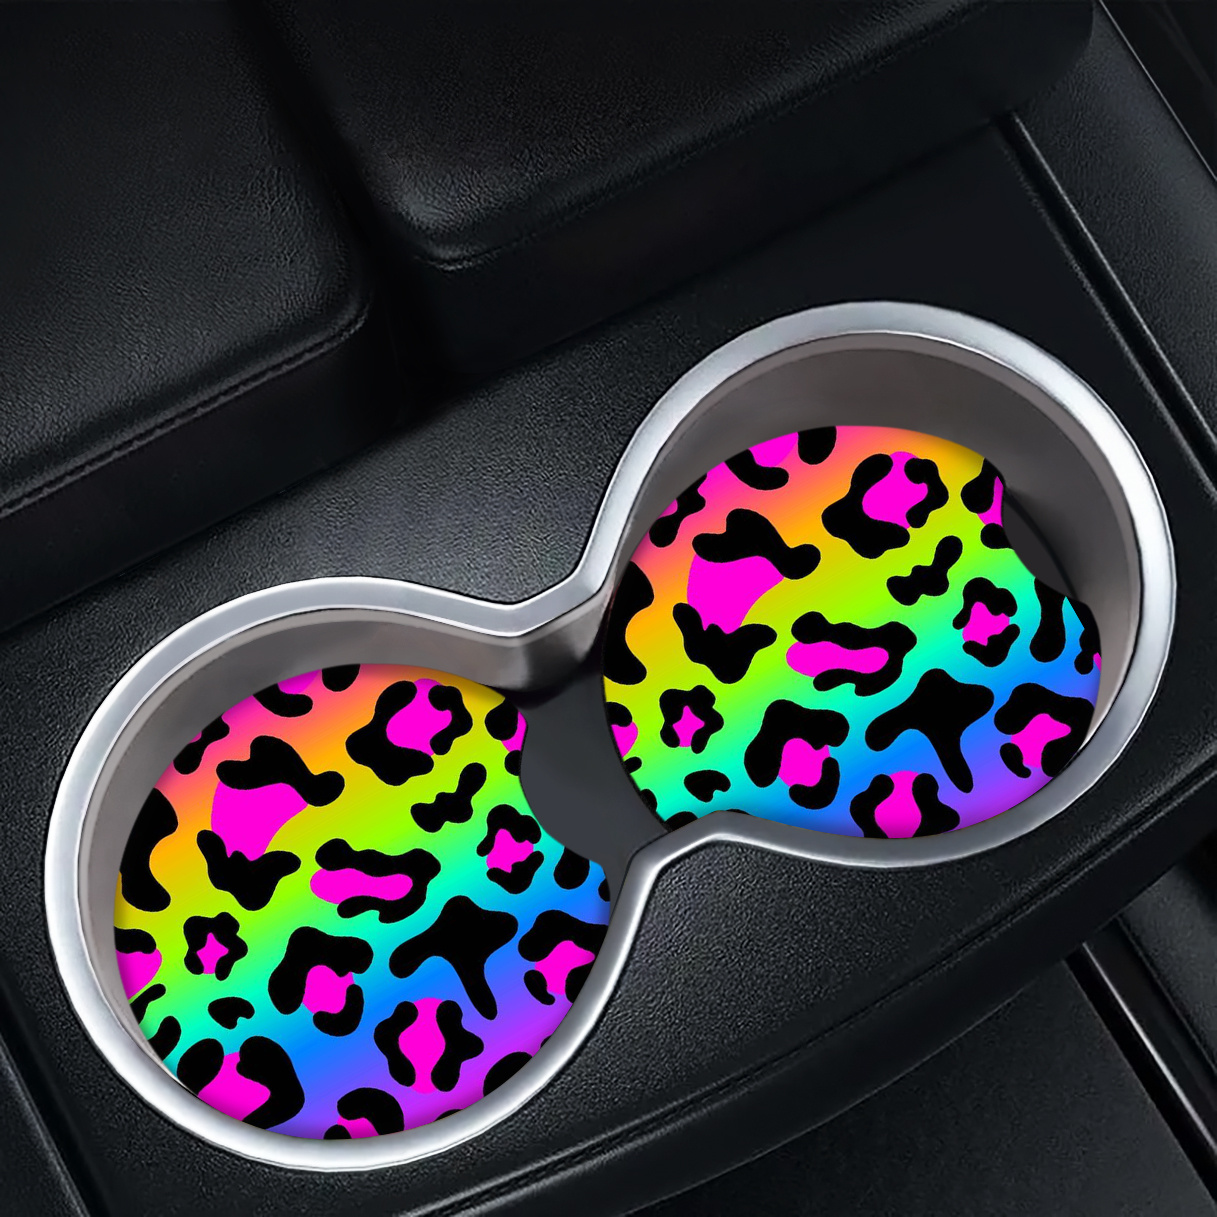 

2pcs Colored Leopard Print Foam Coasters, Absorbent Car Cup Holder Coasters, Fashion Car Accessories, Car Cup Accessories Bd-482